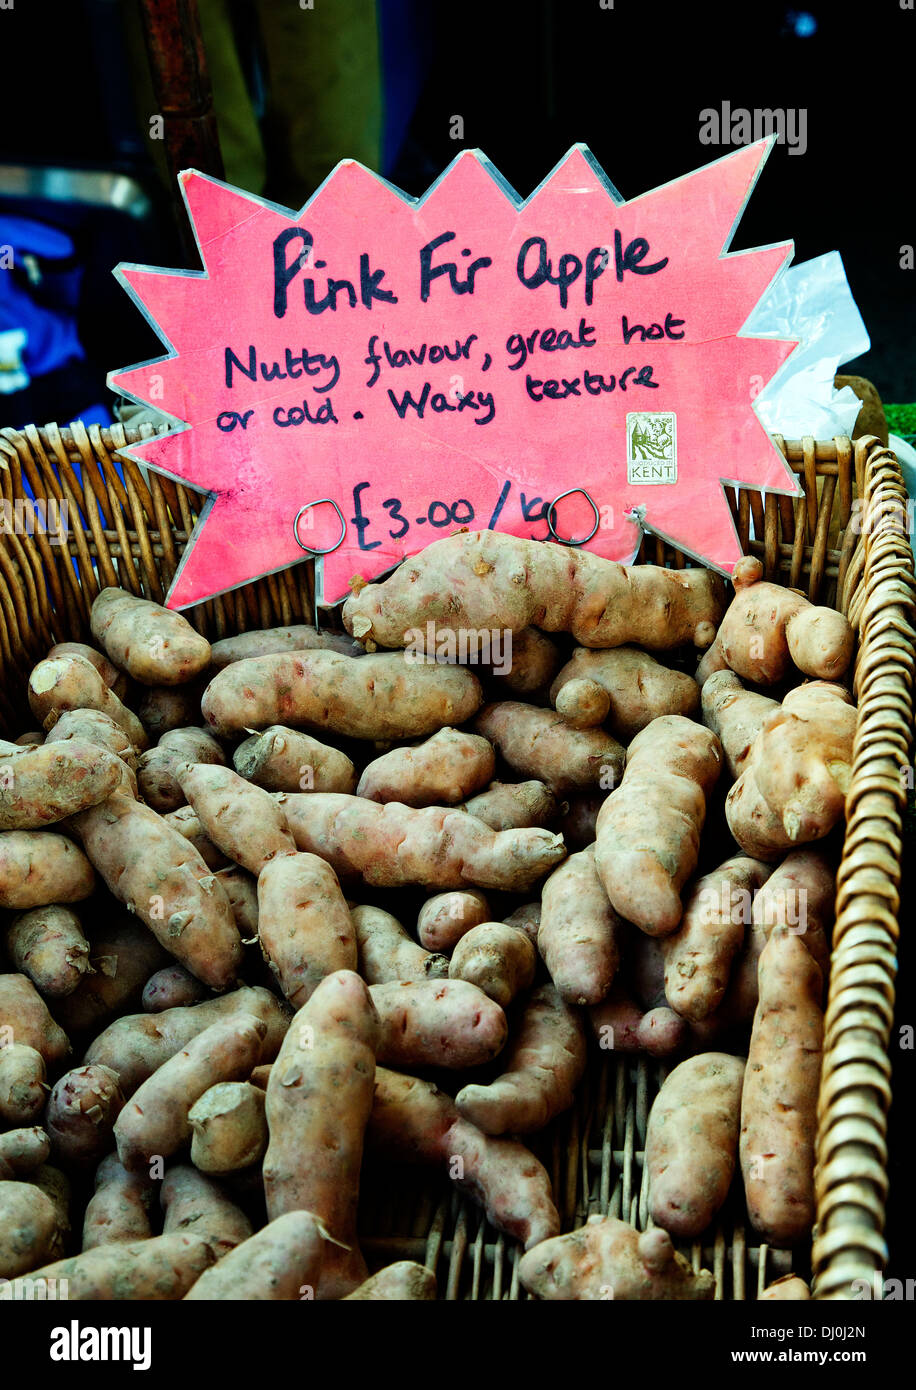 Pink fir apple potatoes, market stall,  London, England, UK, Europe Stock Photo